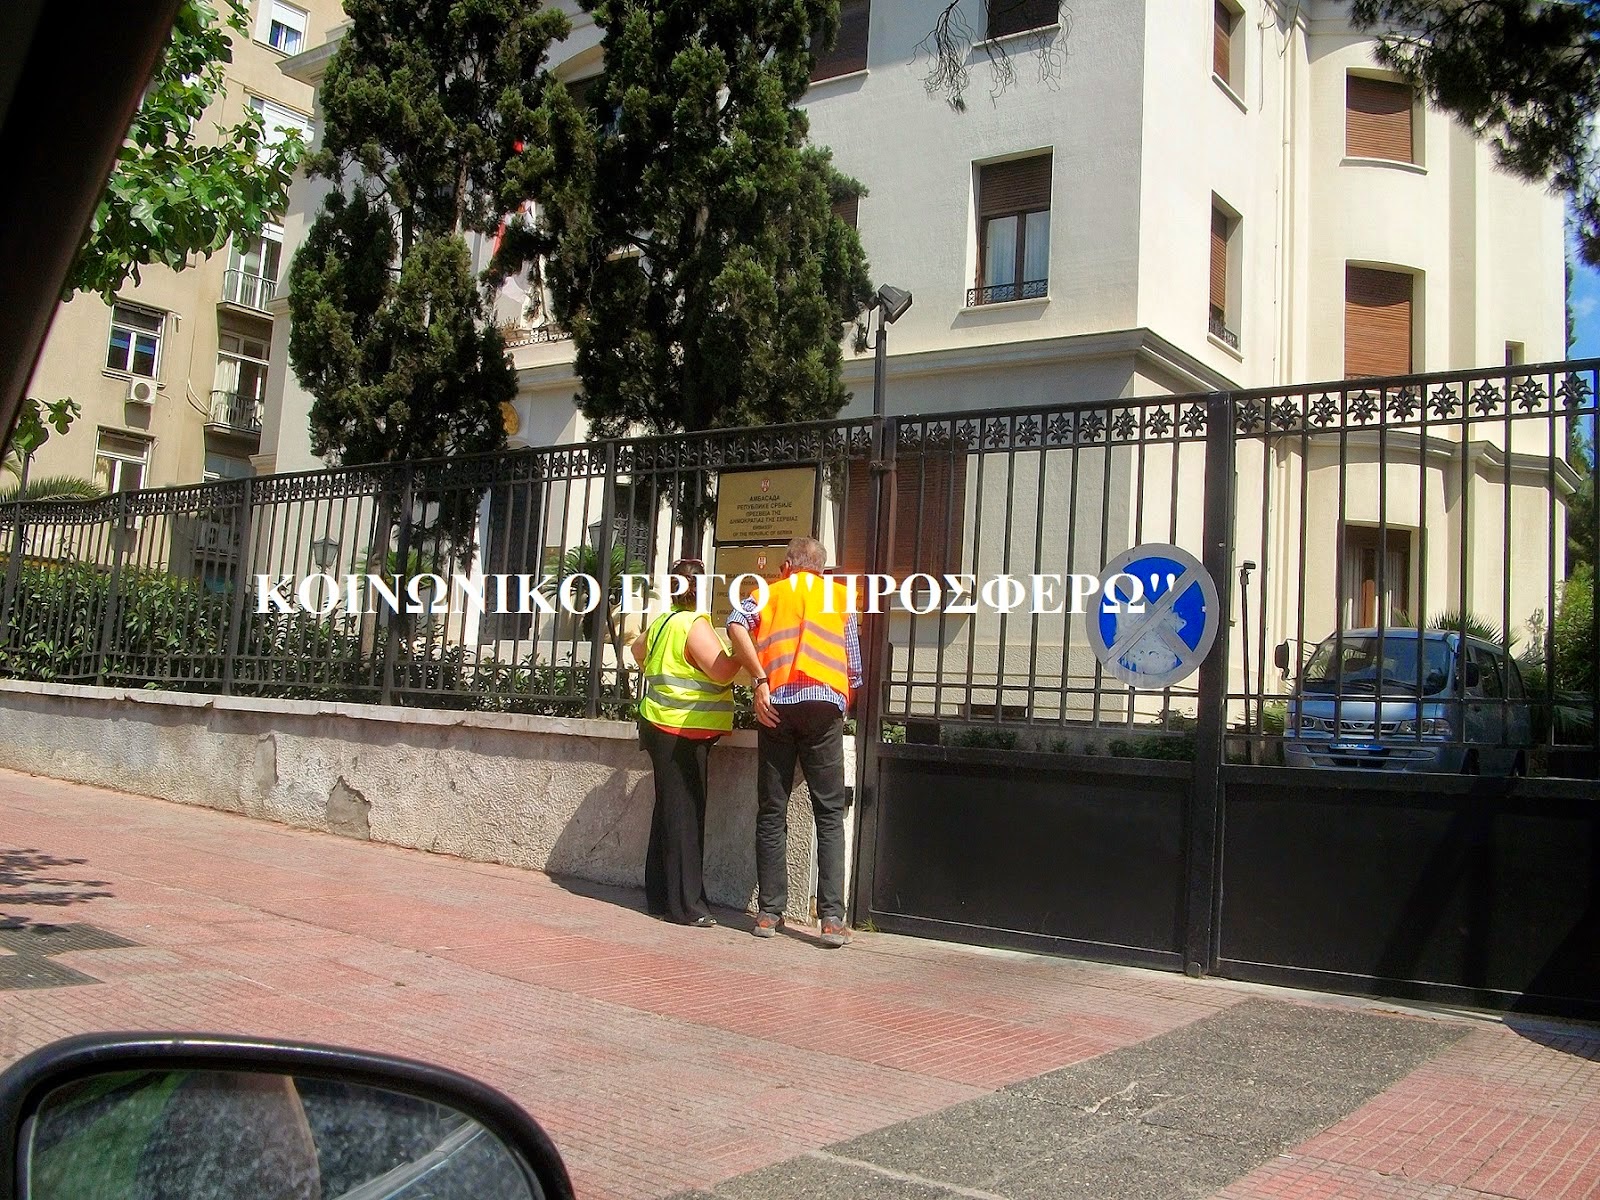 Tο κοινωνικό έργο 'Προσφέρω' Αχαρναί παραδίδει ανθρωπιστική βοήθεια στην πρεσβεία της Σερβίας - Φωτογραφία 5